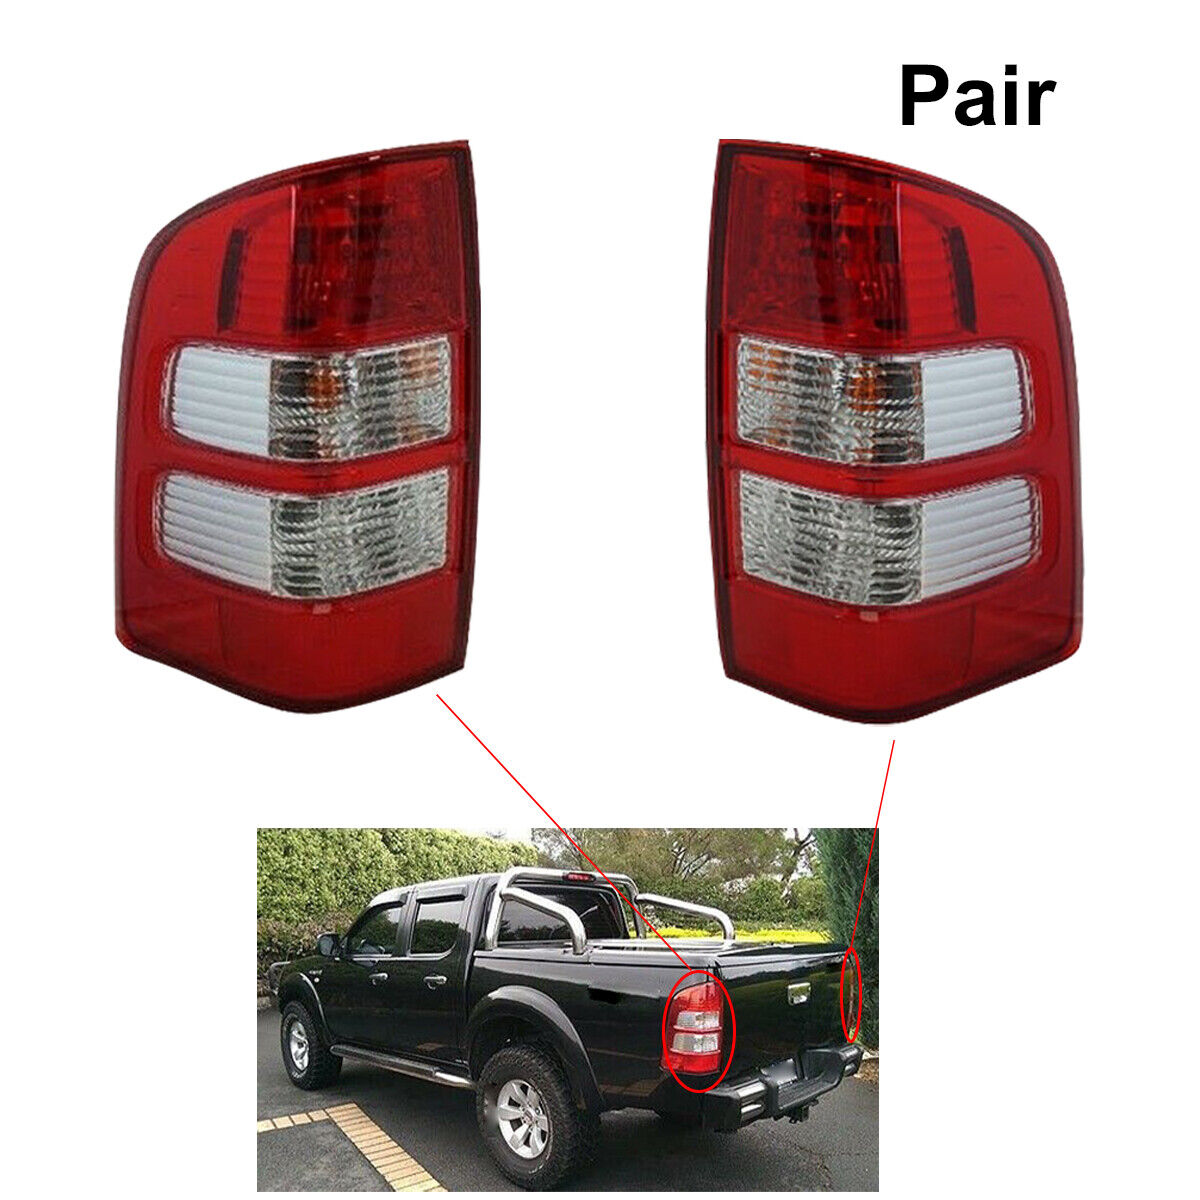 Rear Tail Lights Lamp 07-11 Fits Ford Ranger Thunder Pickup Truck RH / LH / Pair